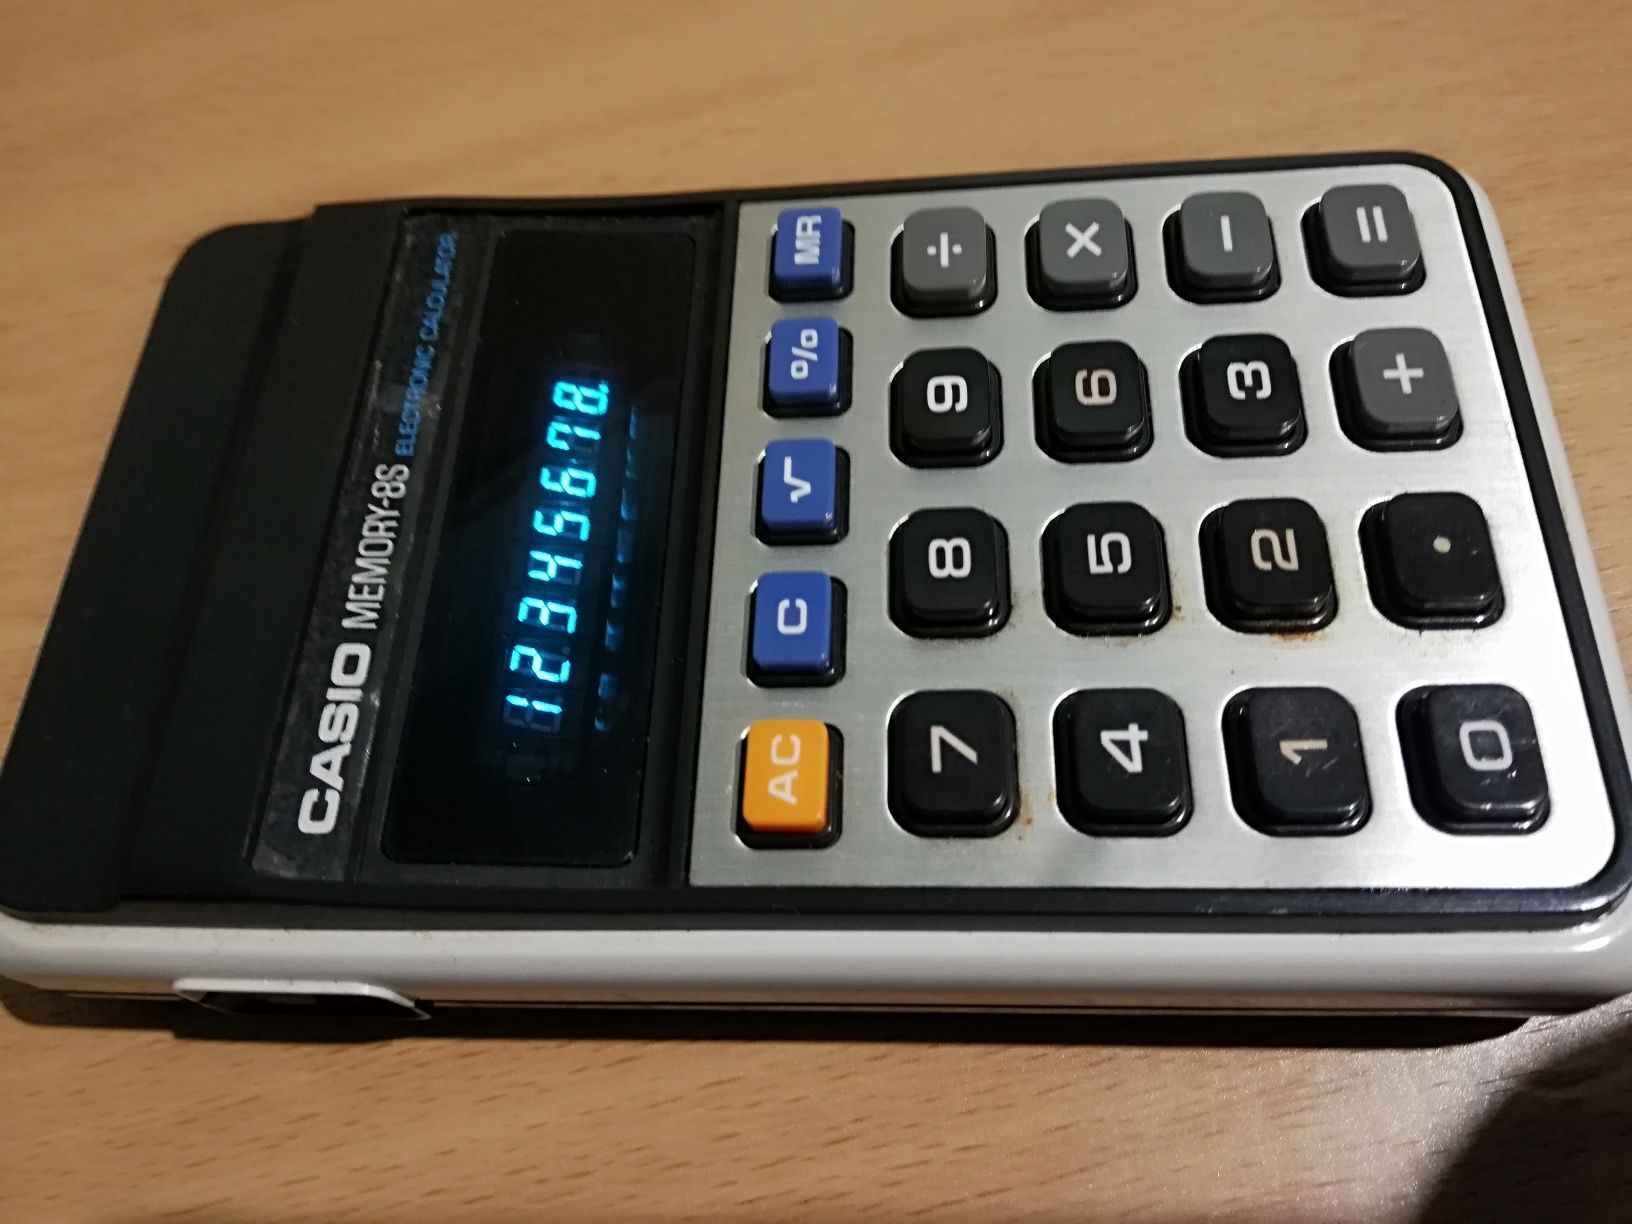 Calculator Casio Memory 8S